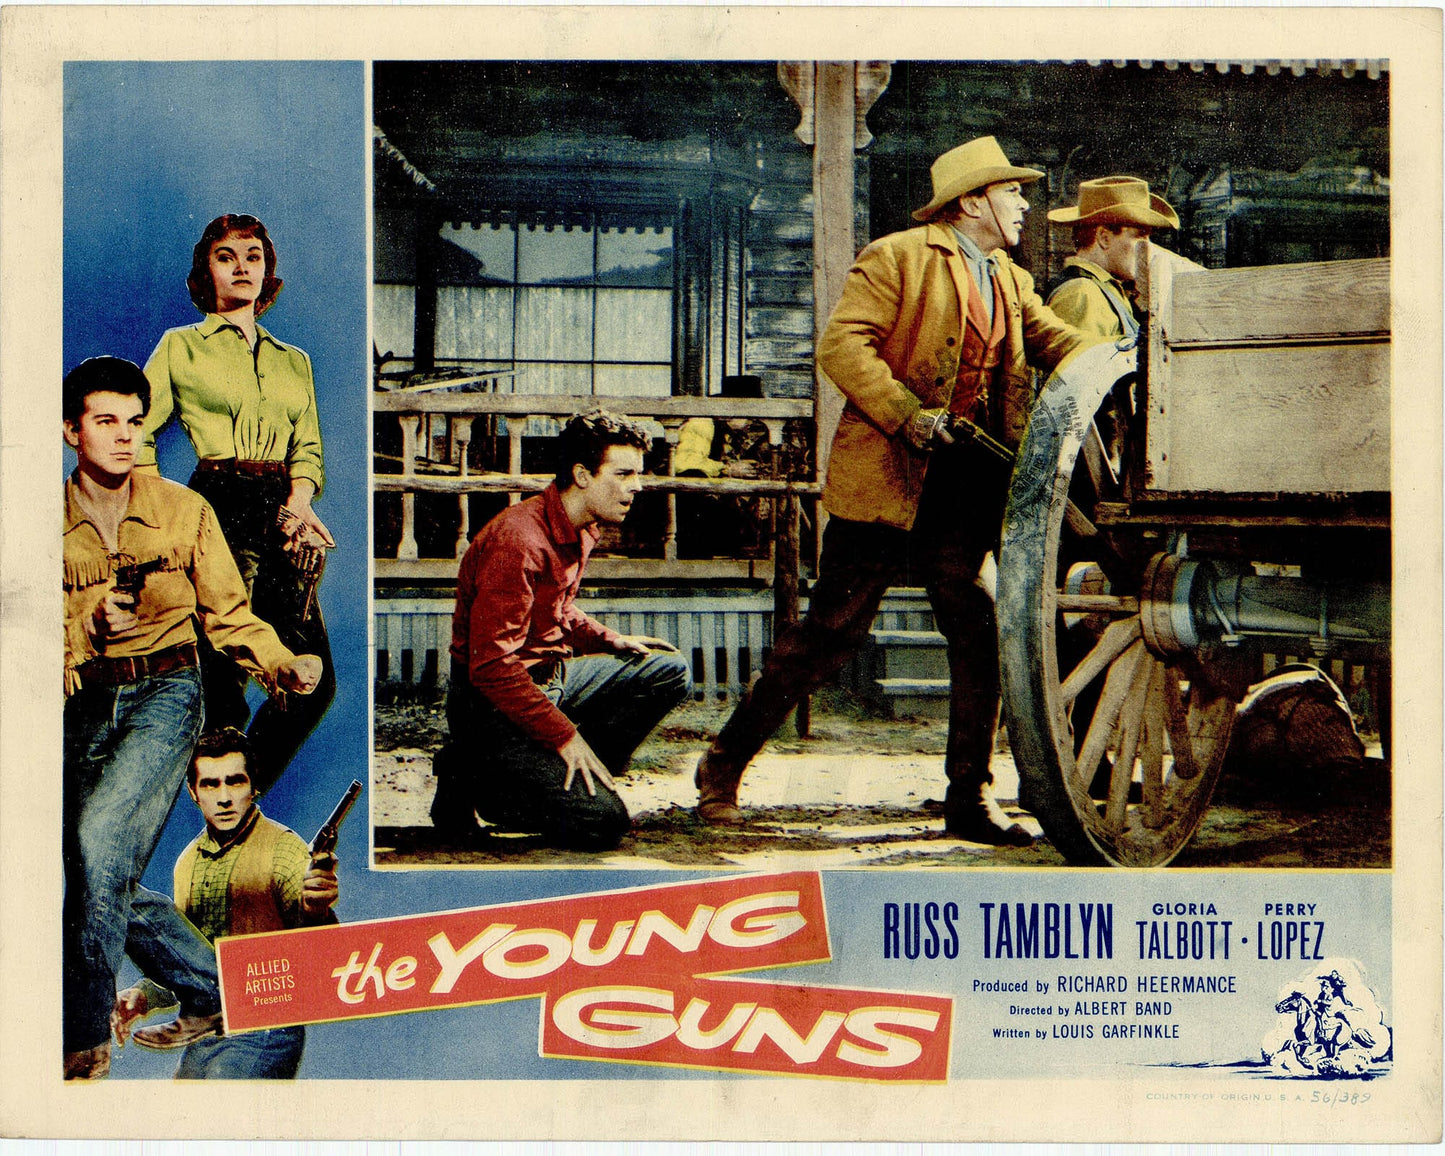 The Young Guns Movie Lobby Card